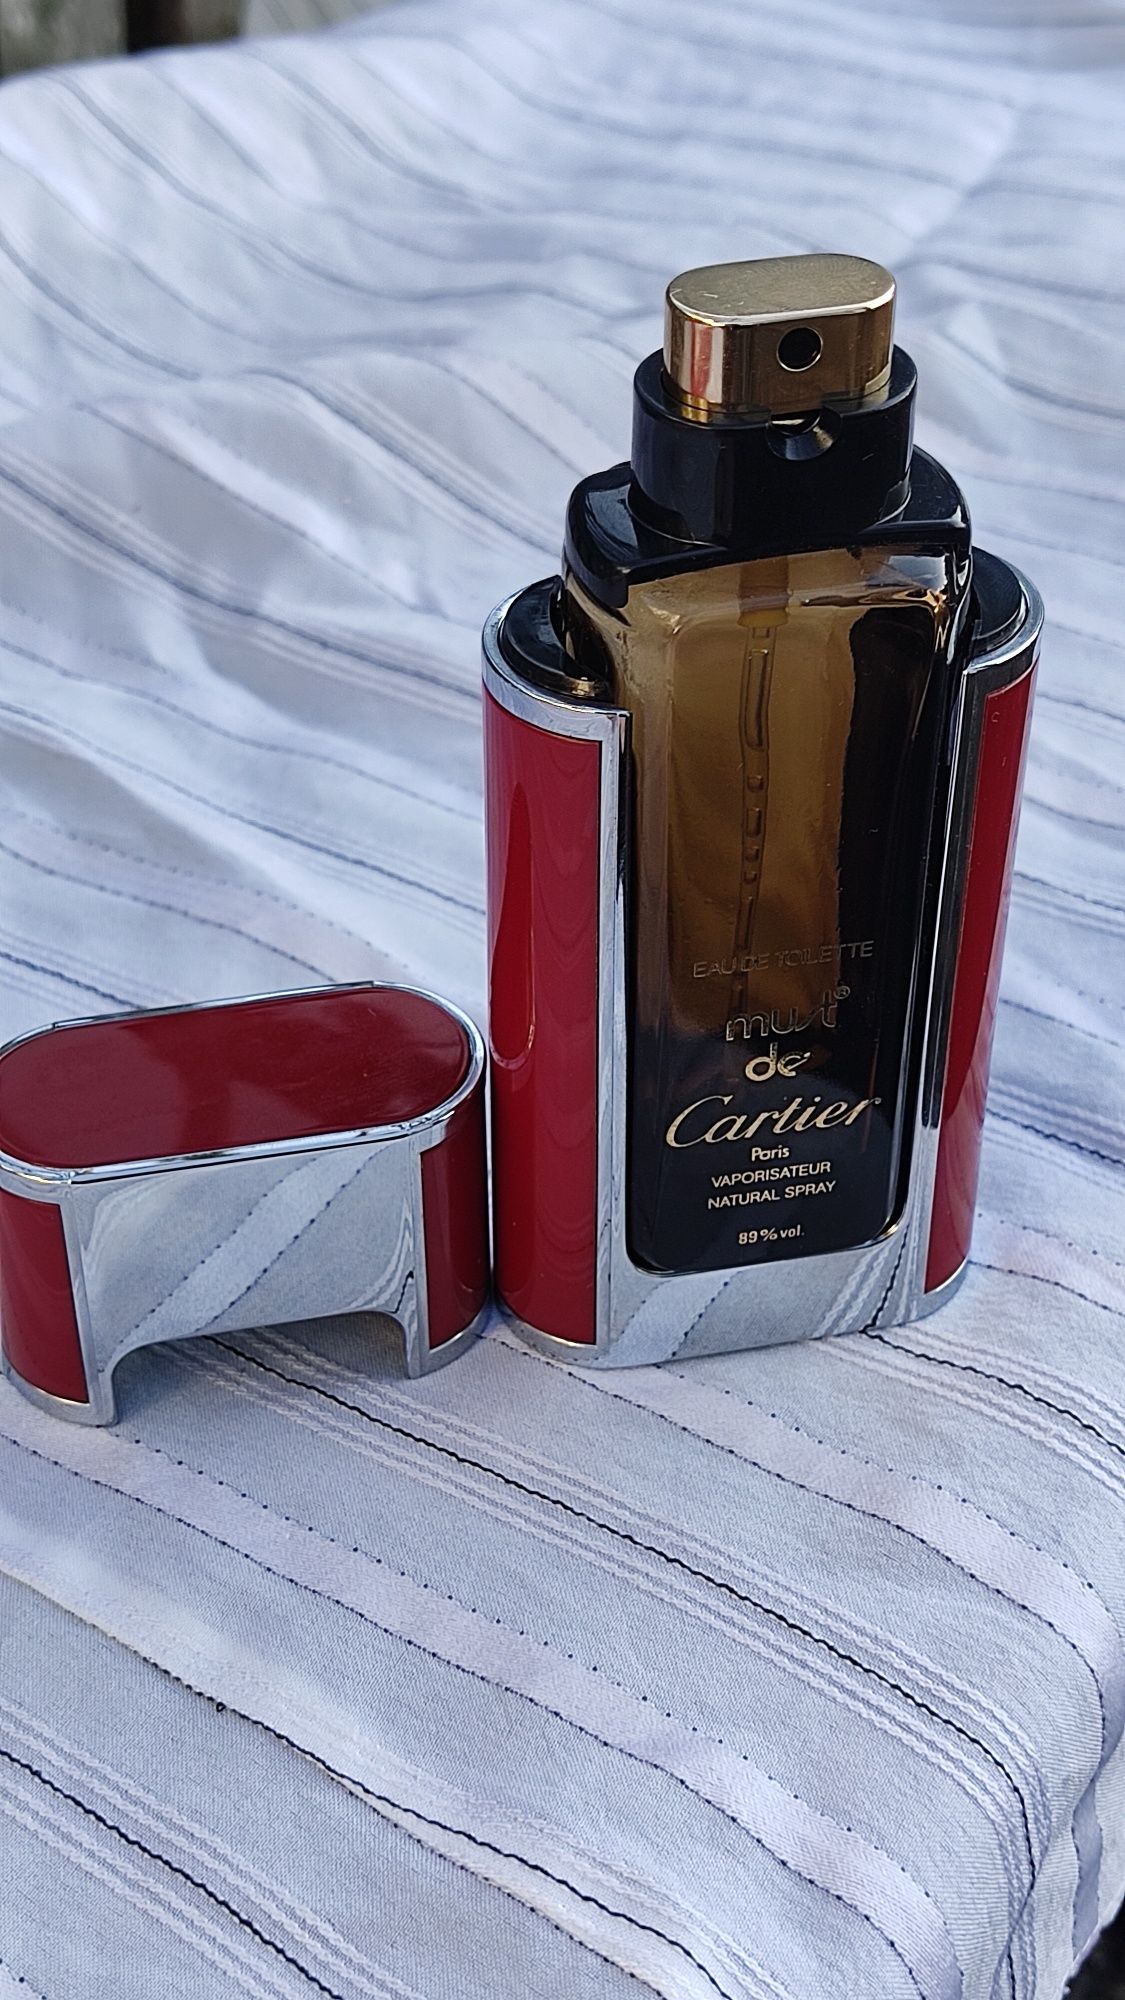 Must de Cartier - винтаж dior addict shine,mcquen kingdom, Chloe see